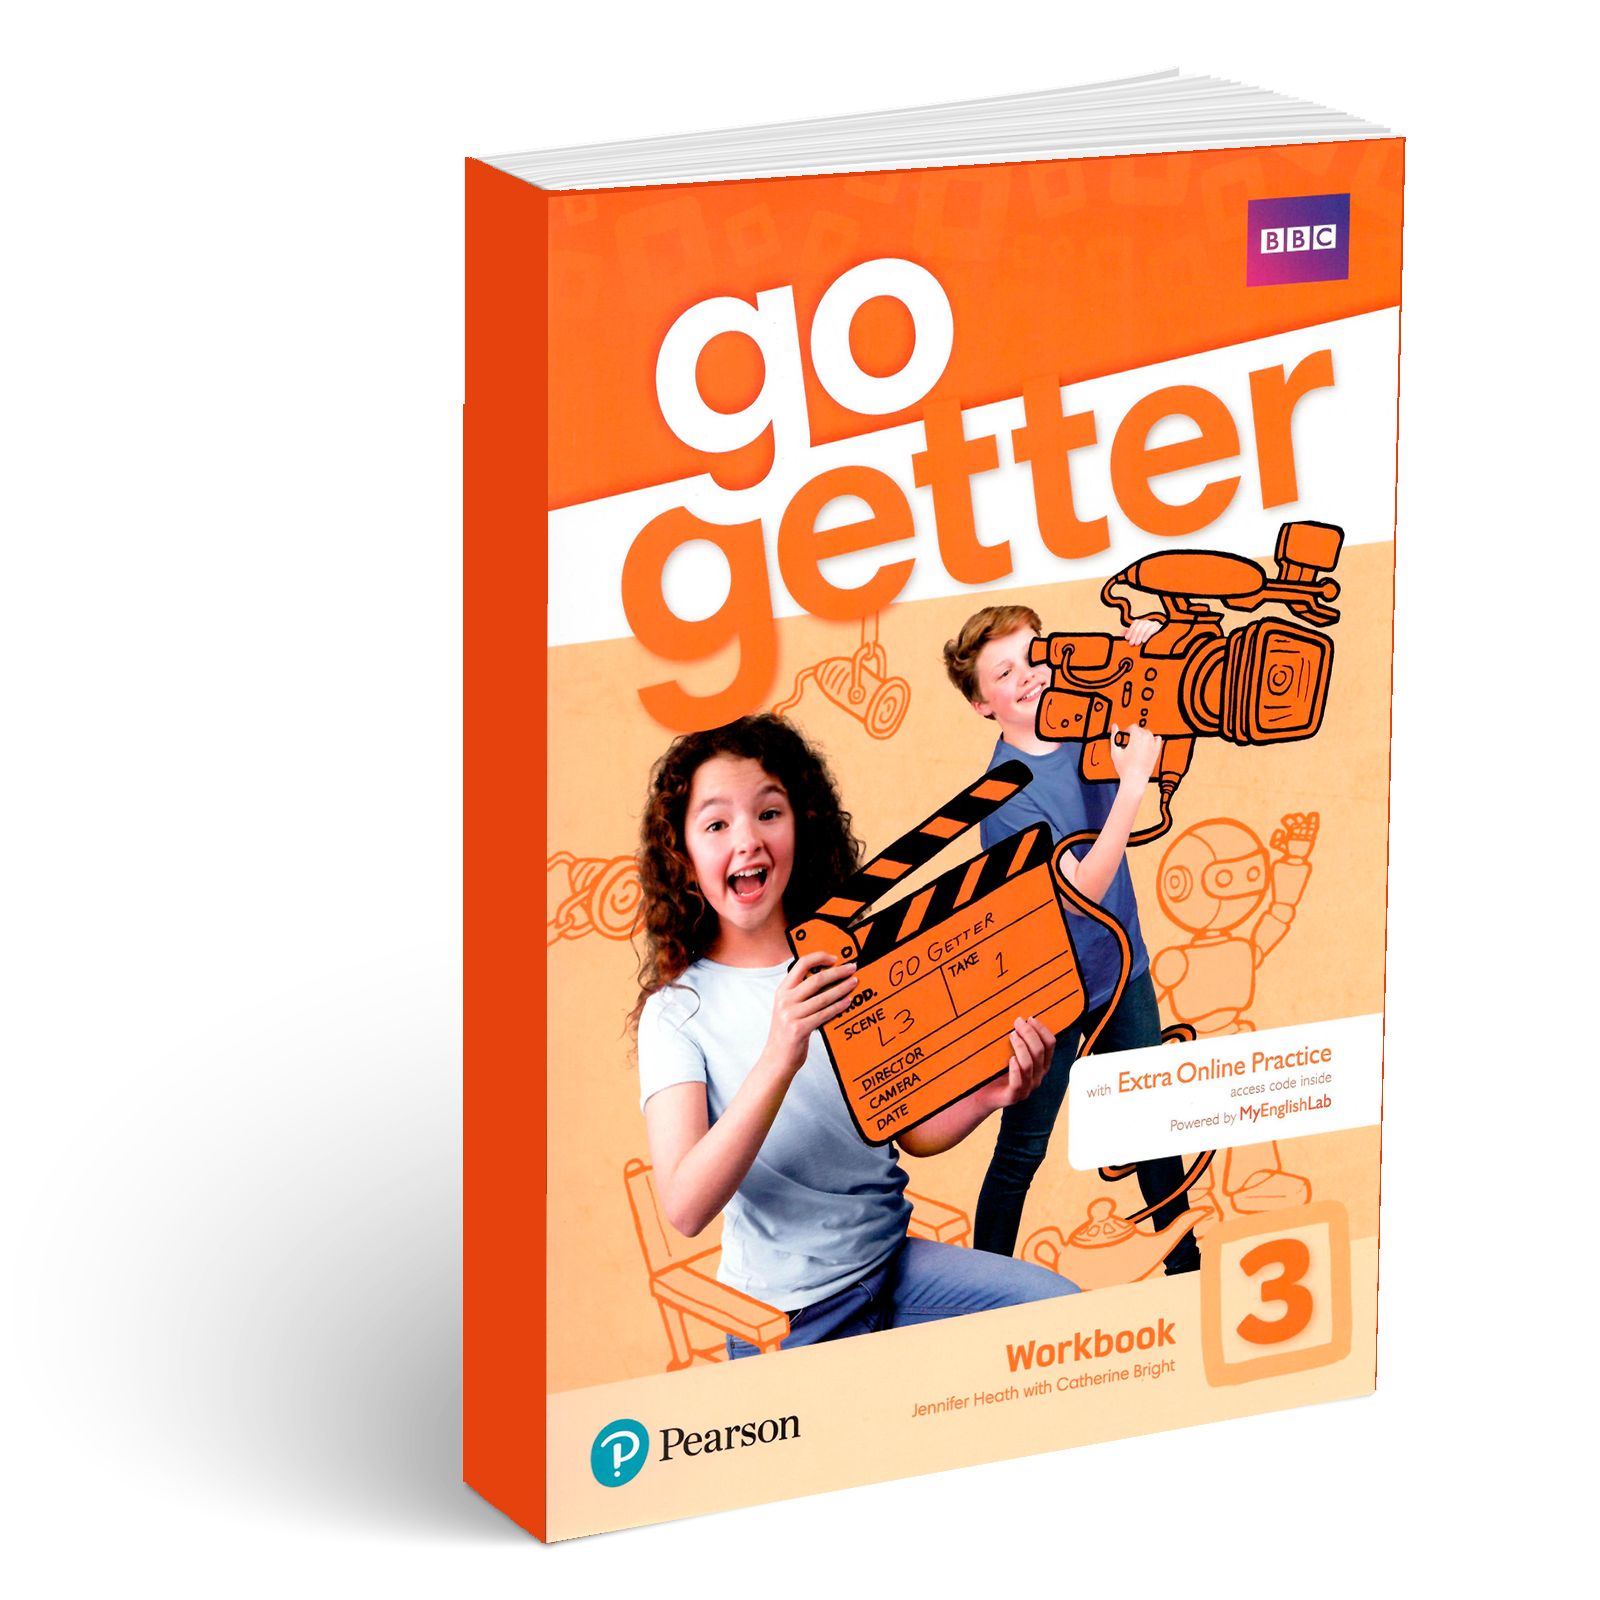 Go getter 7.3. Go Getter 3 Workbook. Go Getter учебник. Учебник go Getter 3. Gogetter 3 students book.